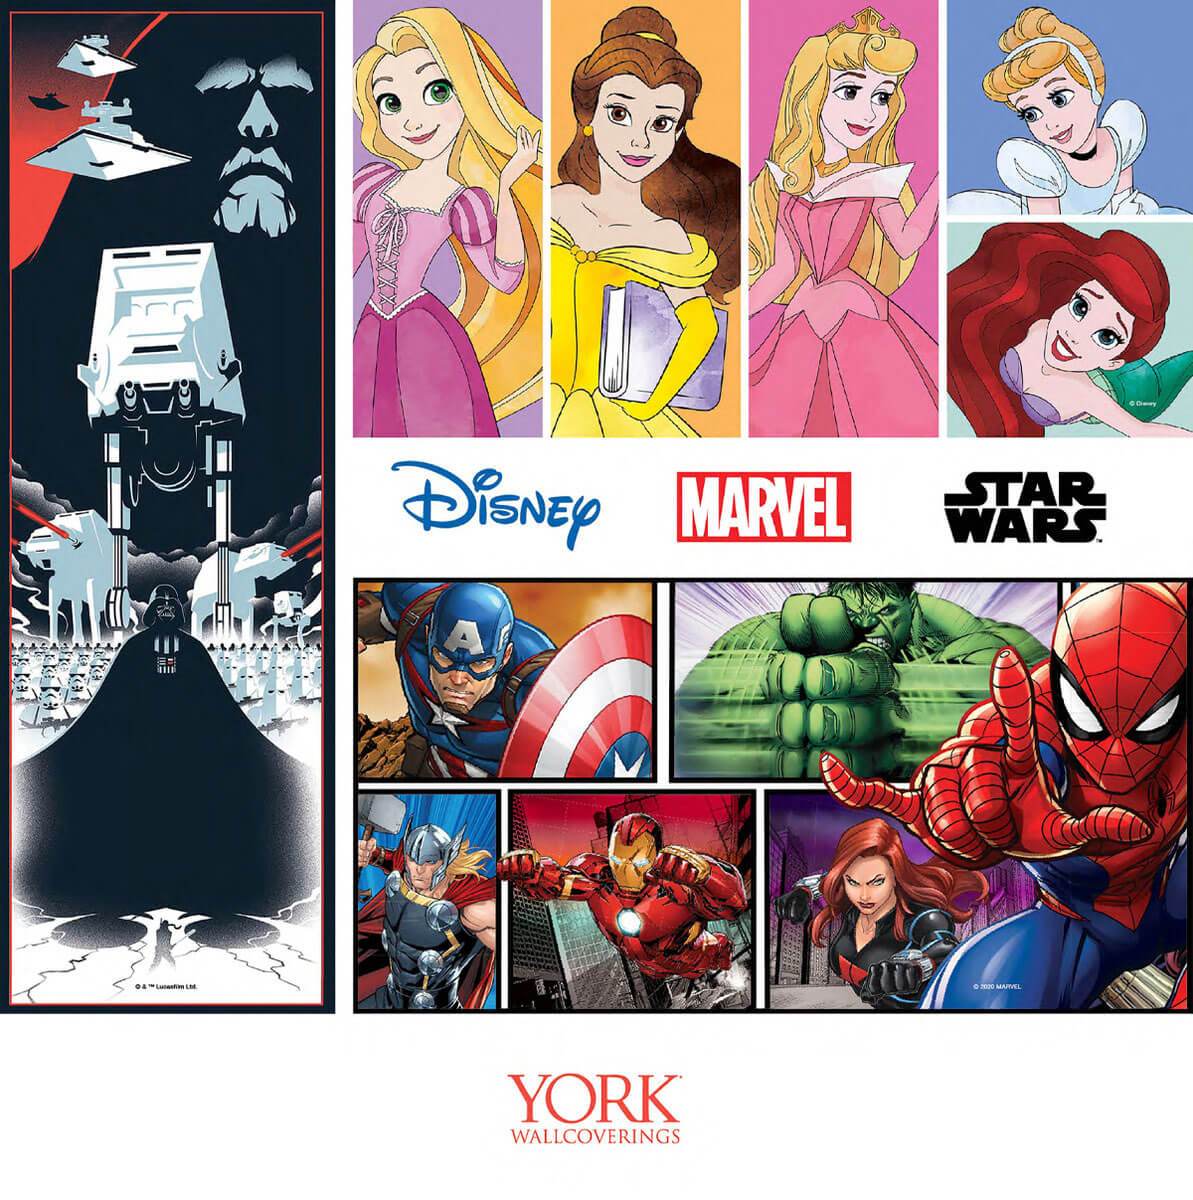 Disney Kids Vol. 4 Princess Perfect Scroll Wallpaper - White & Glitter